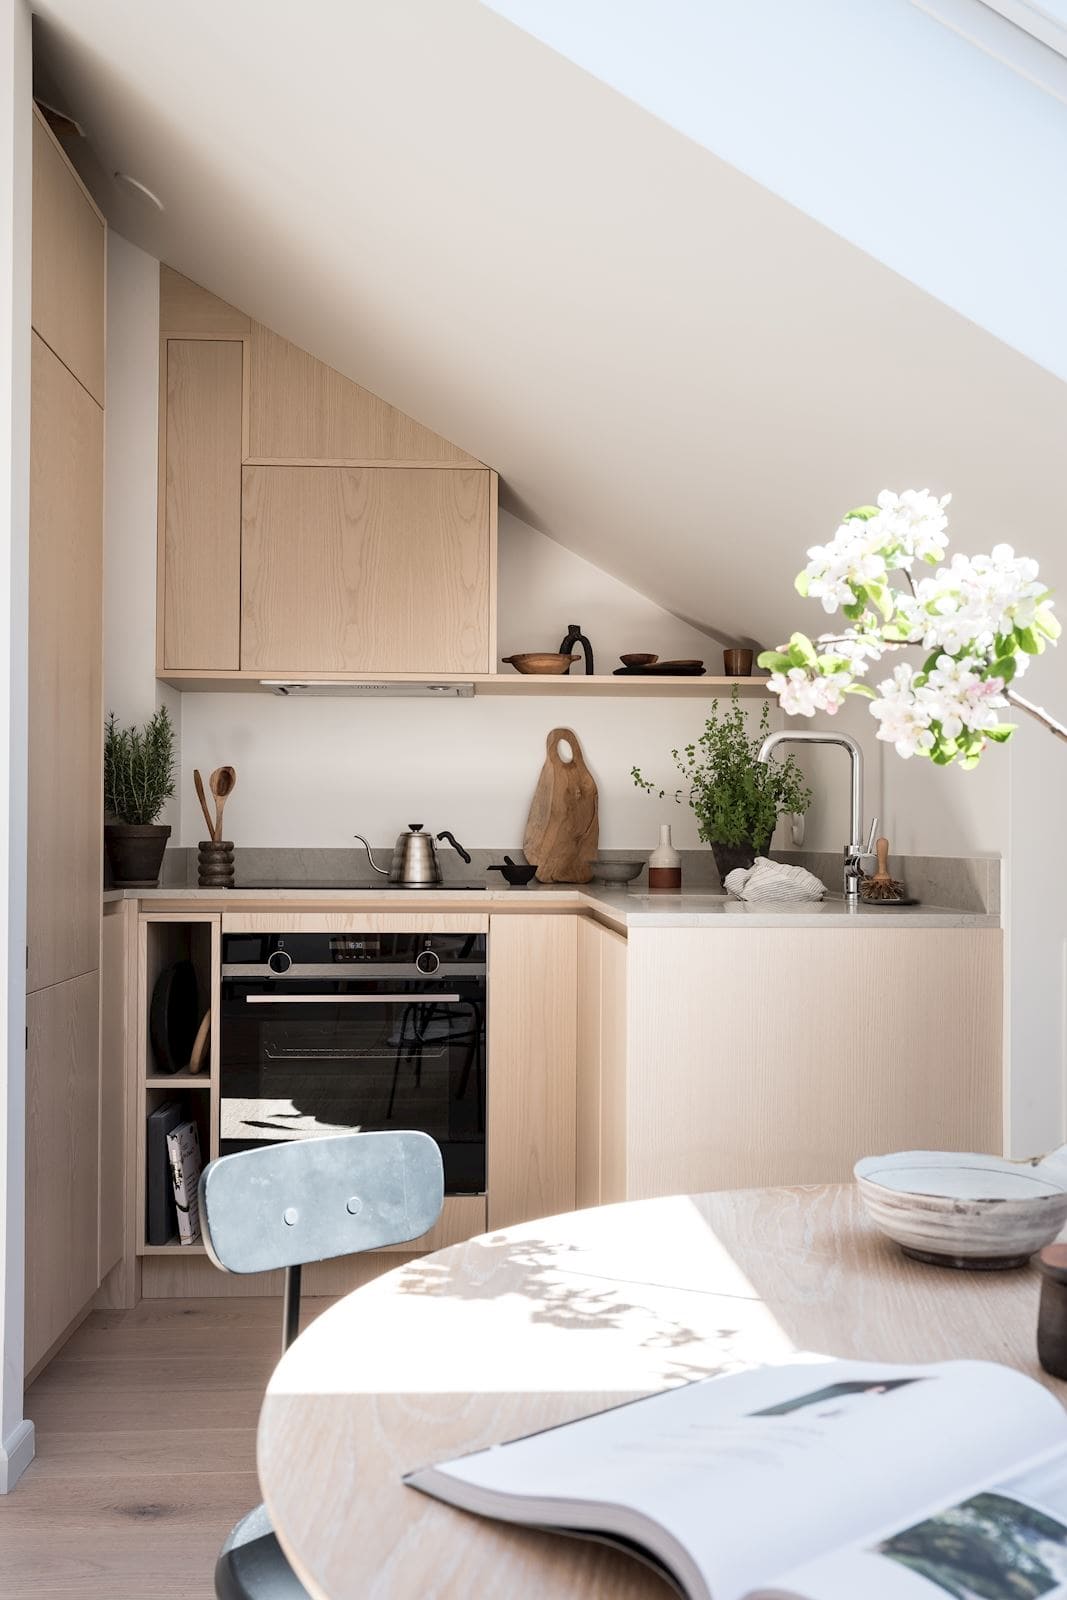 21 Small kitchen ideas perfect for studio apartments - COCO LAPINE